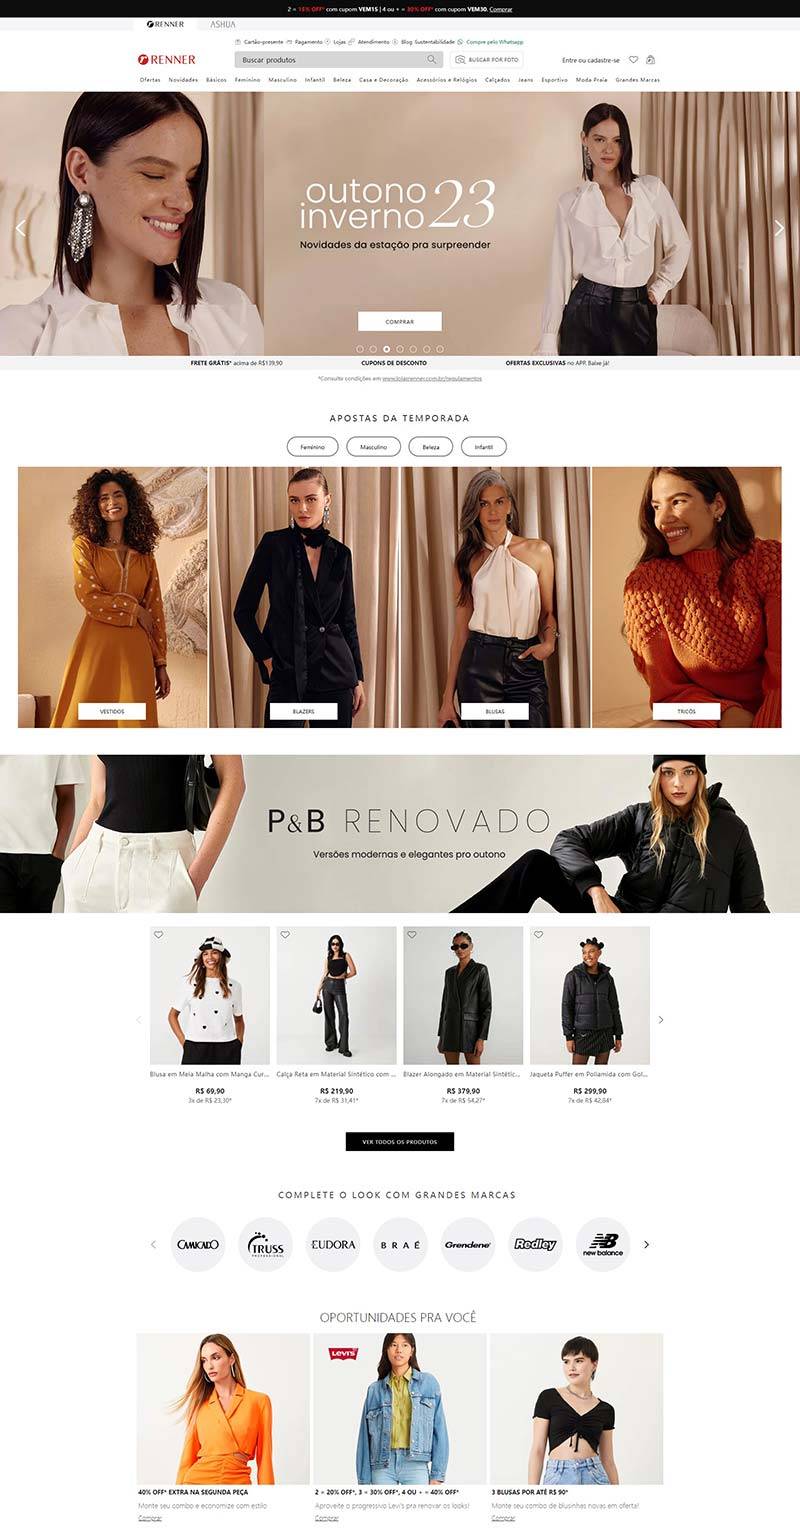 Lojas Renner 巴西百货时装品牌购物网站